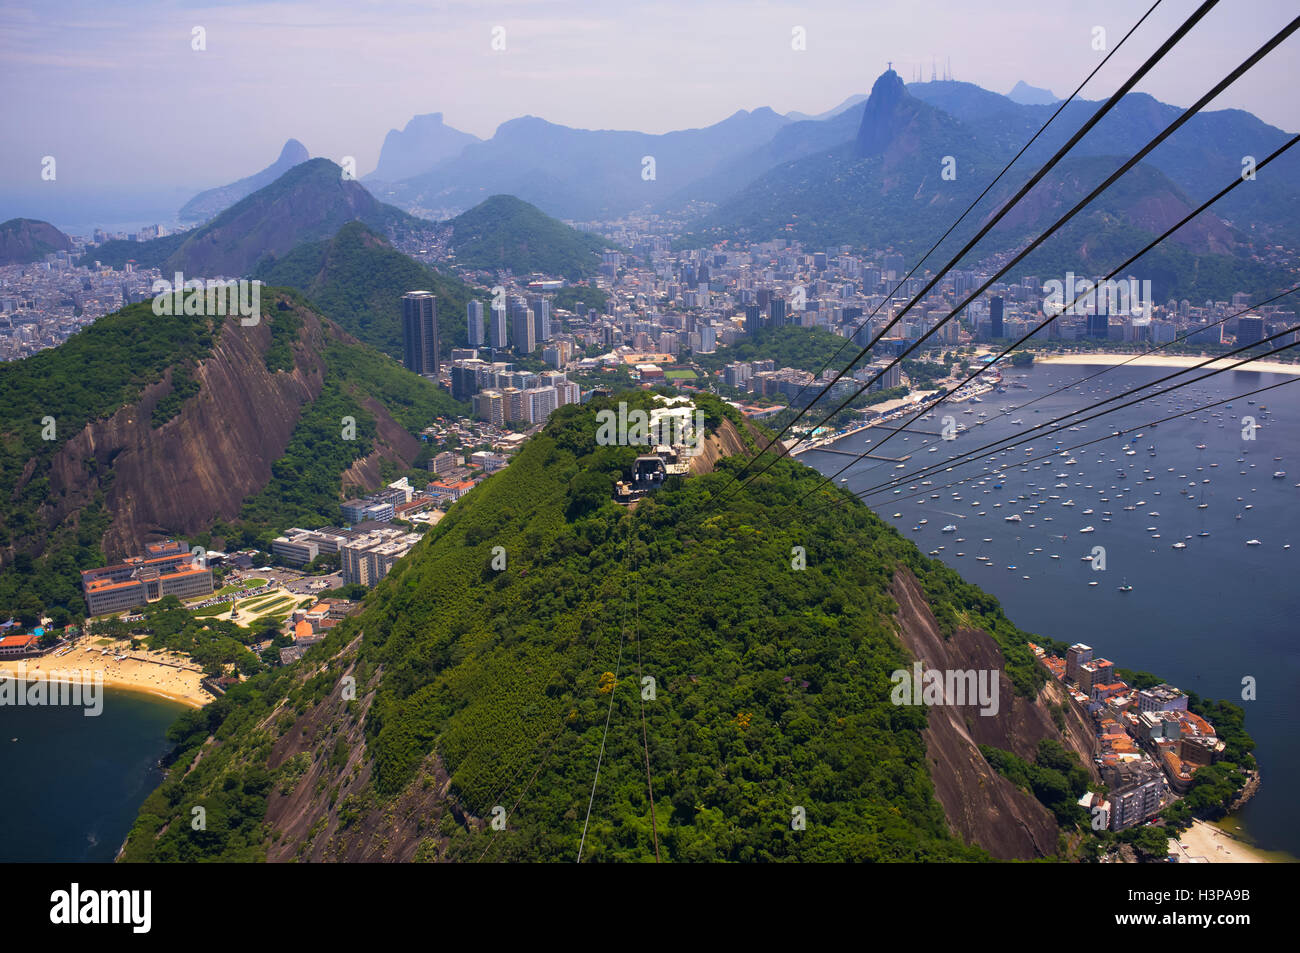 View over Botafogo and the Corcovado from the Sugar Loaf Mountain, Rio de Janeiro, Brazil Stock Photo